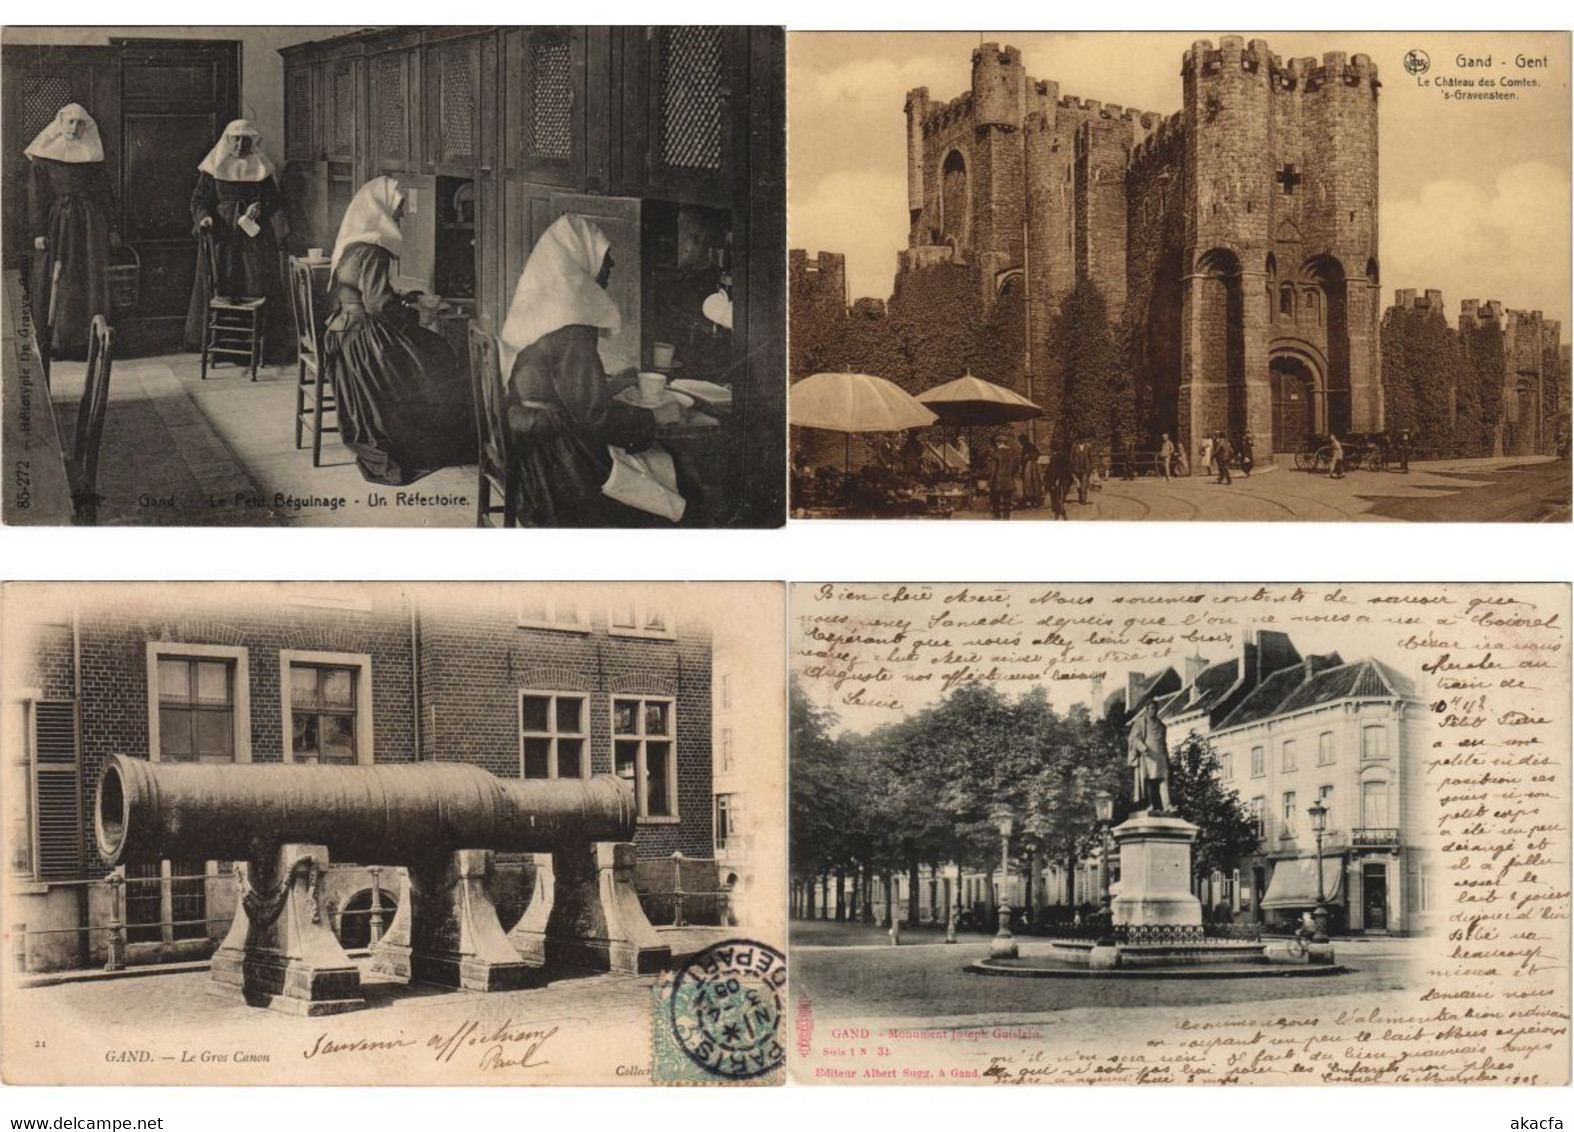 GAND GENT BELGIUM 400 Vintage Postcards pre-1940 (L5240)